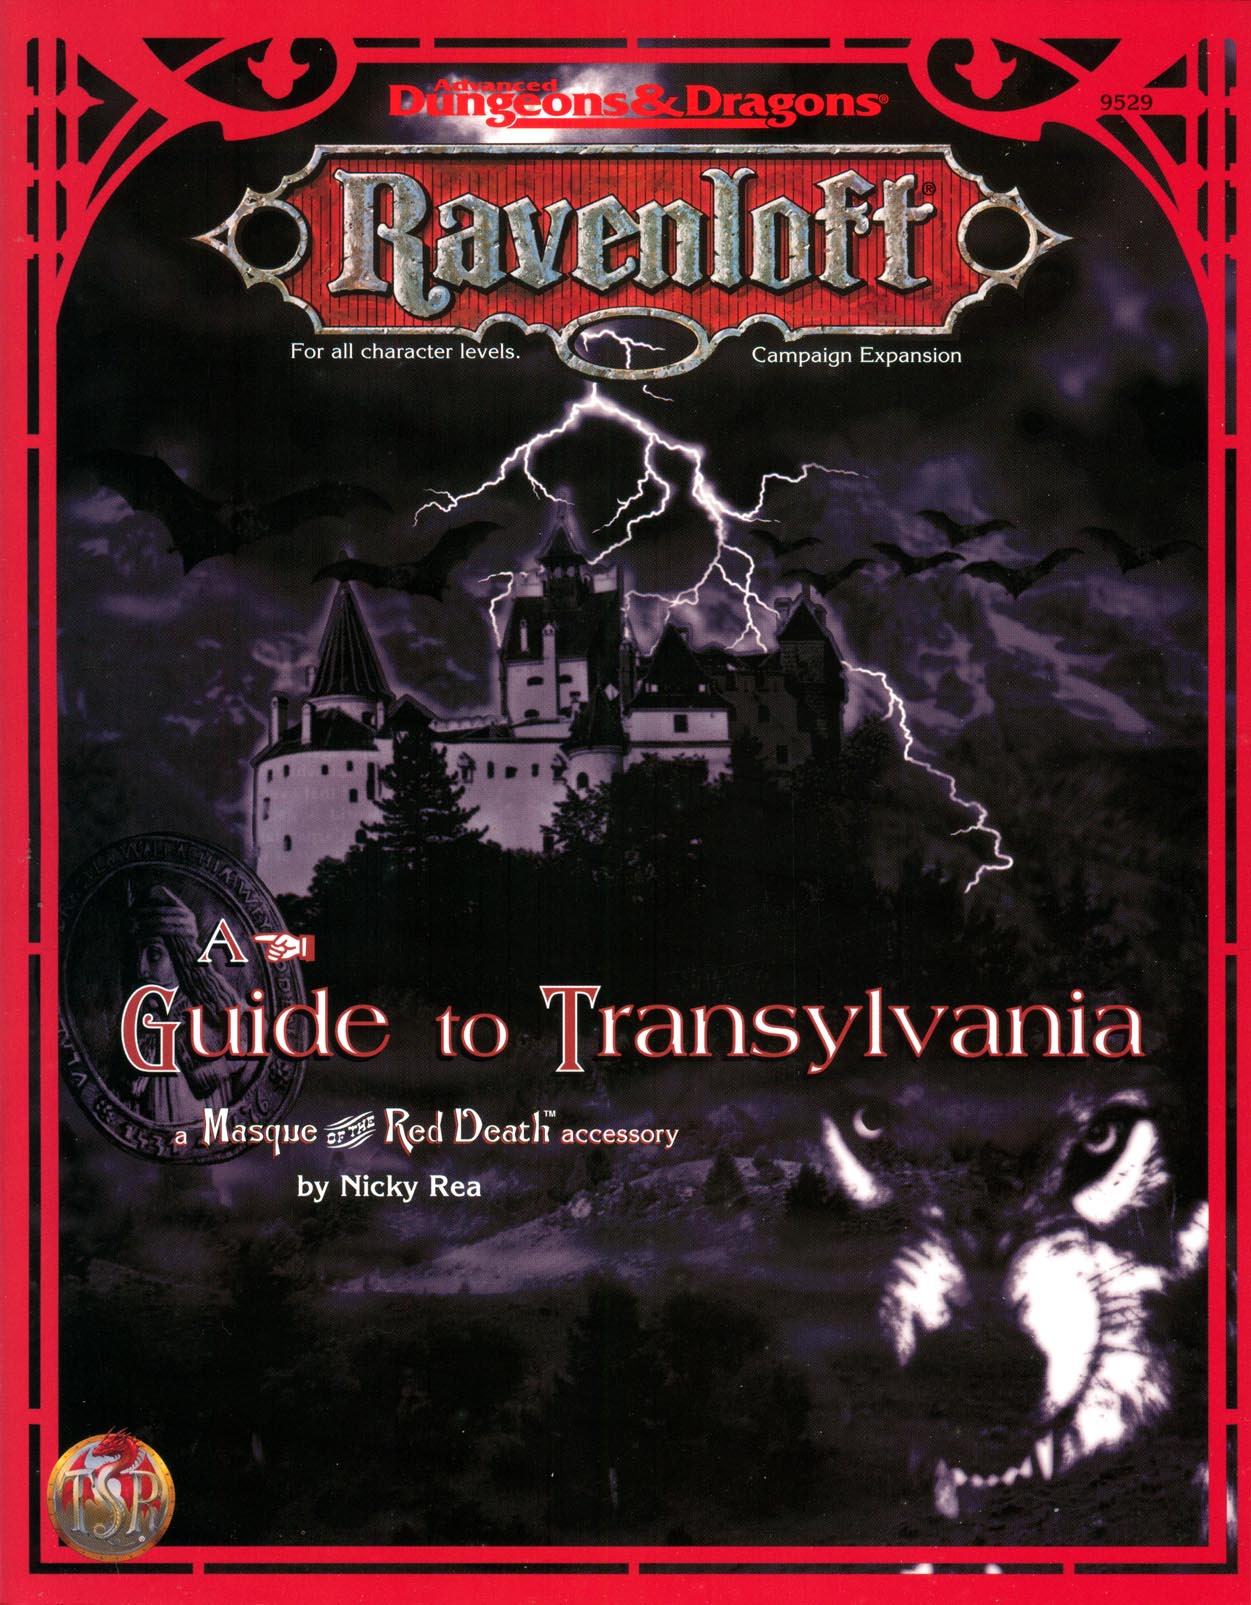 A Guide to TransylvaniaCover art